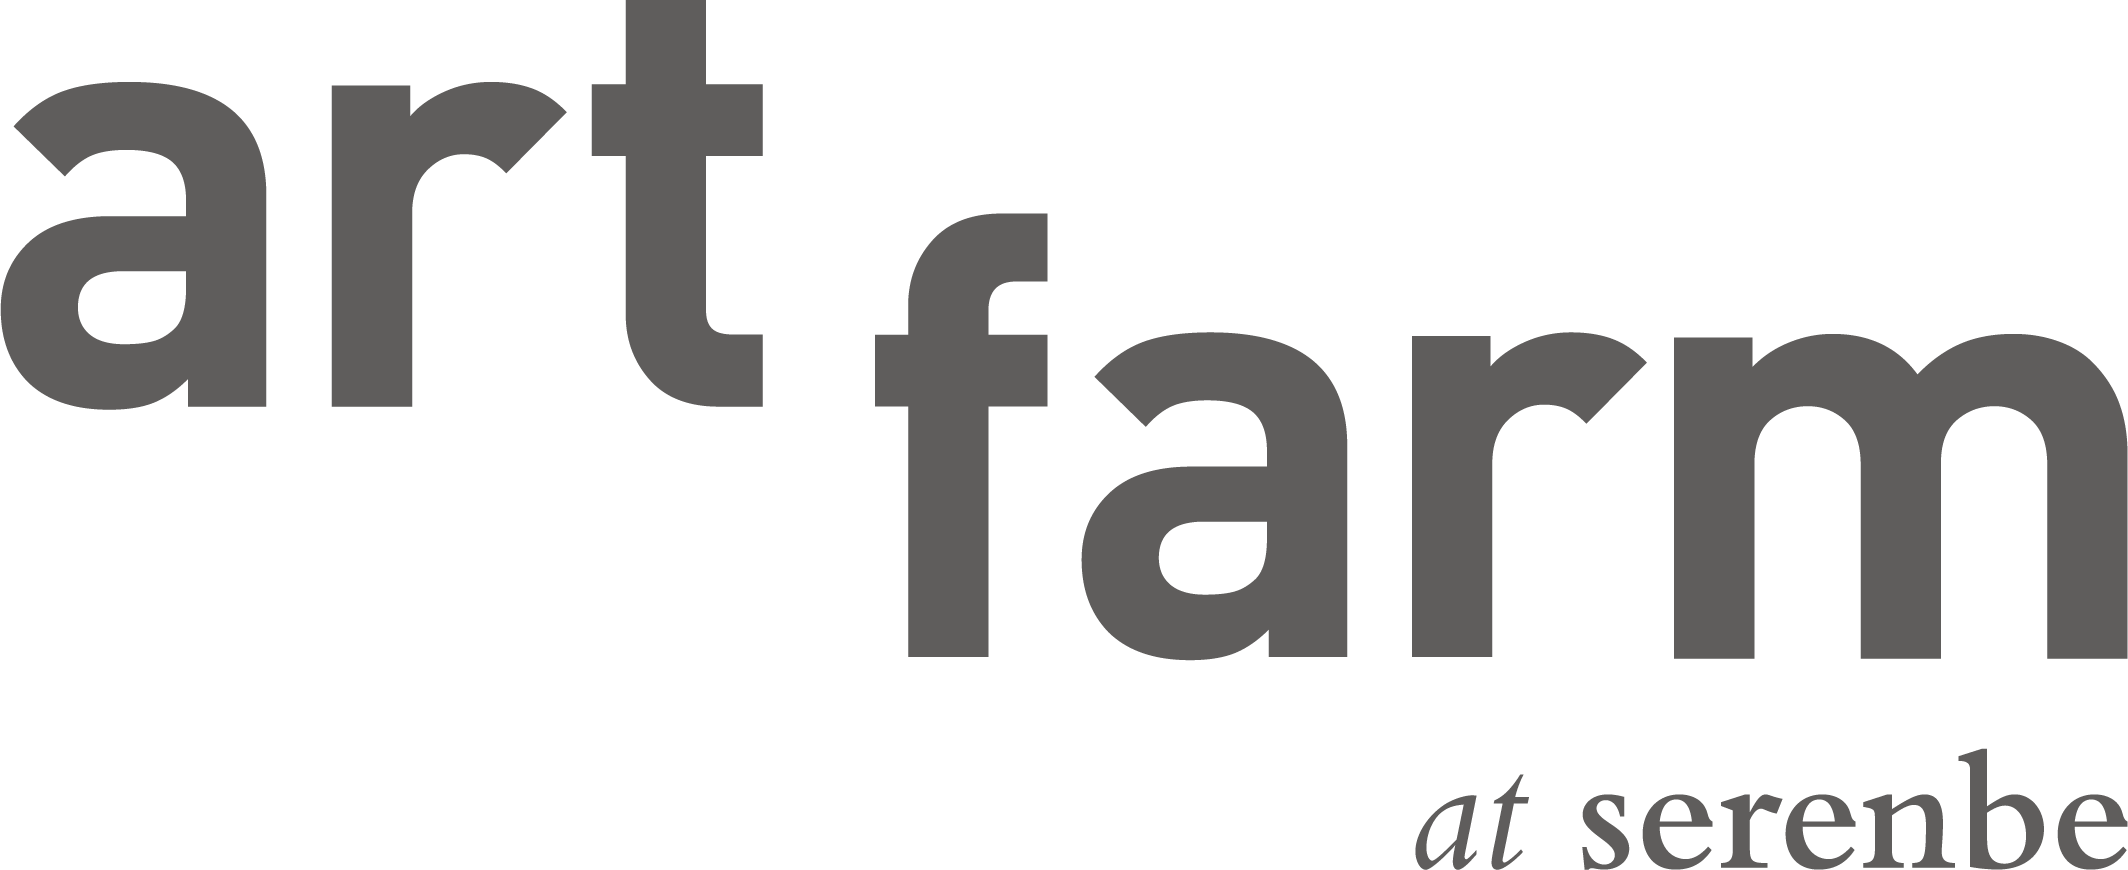 Art Farm logo showhouse sponsor.png